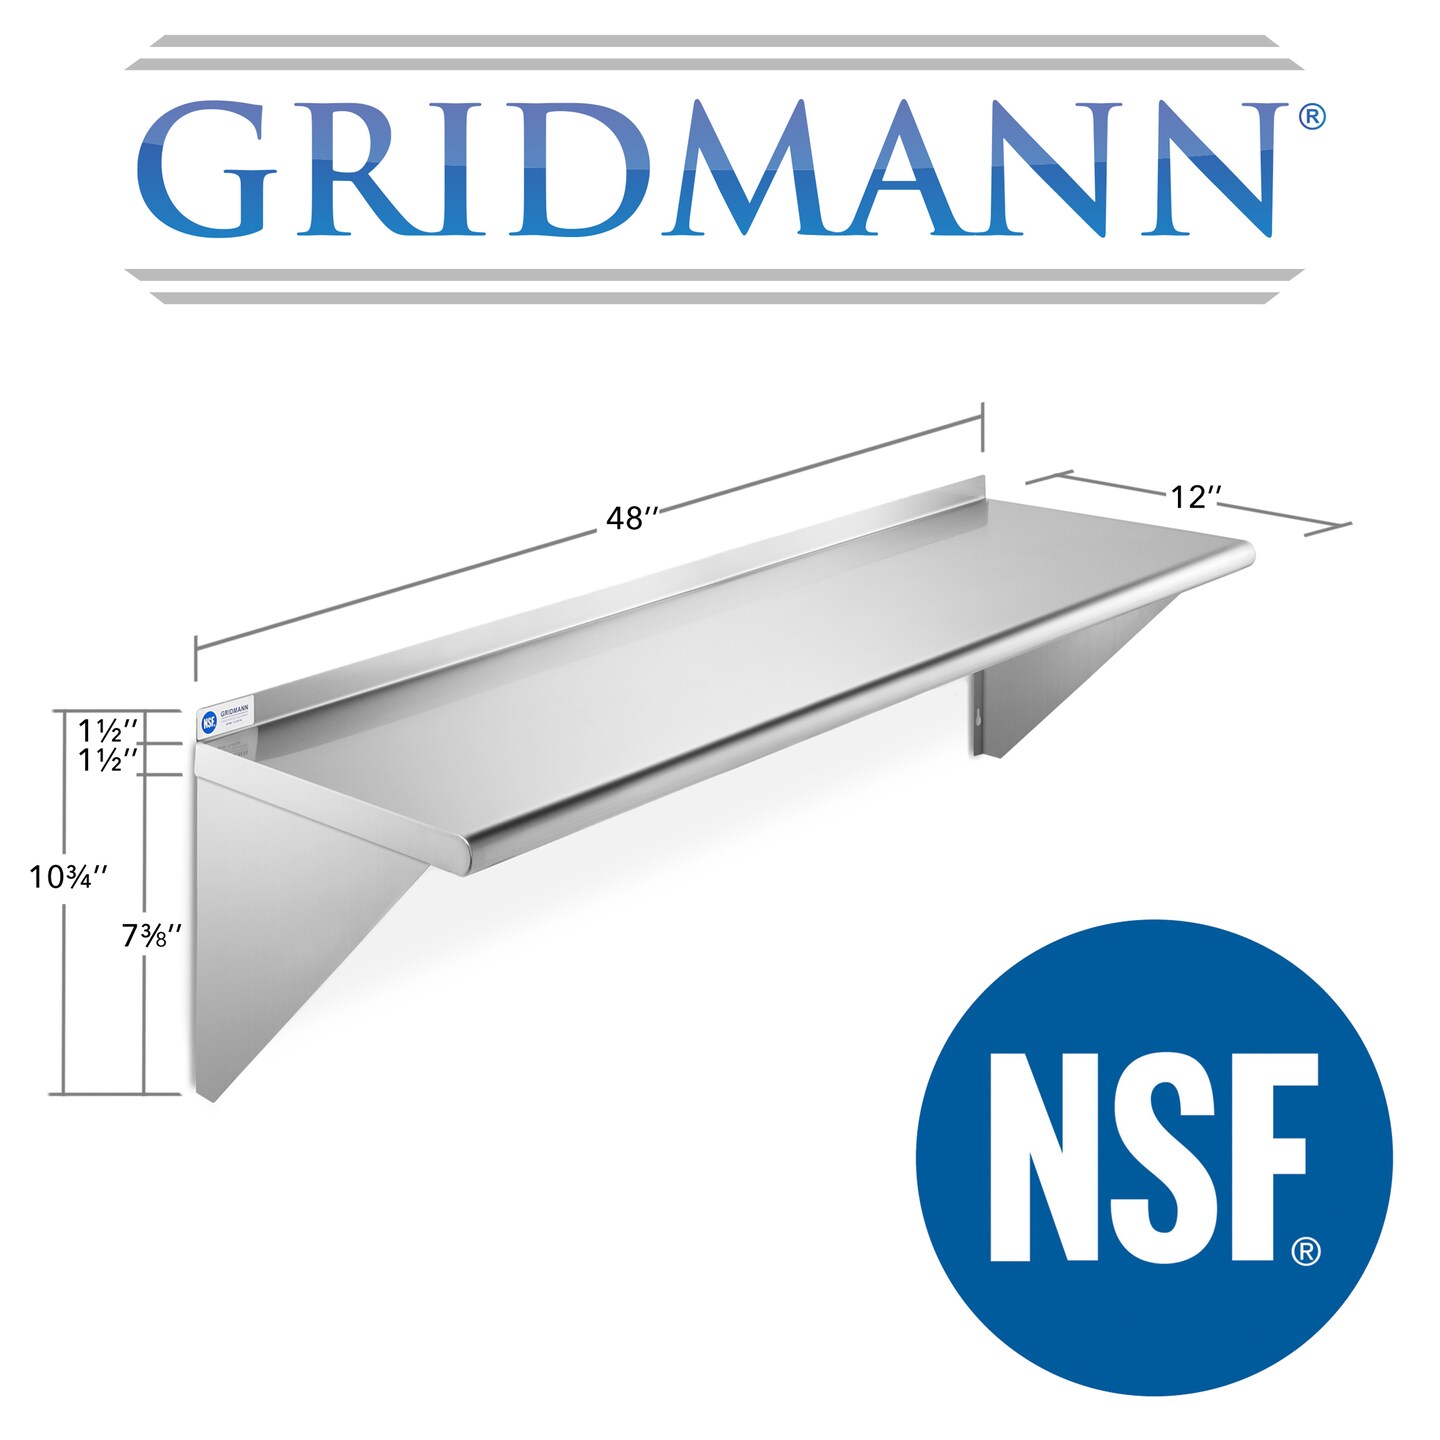 GRIDMANN NSF 16 Gauge Stainless Steel Kitchen Wall Mount Shelf Commercial Restaurant Bar w/ Backsplash